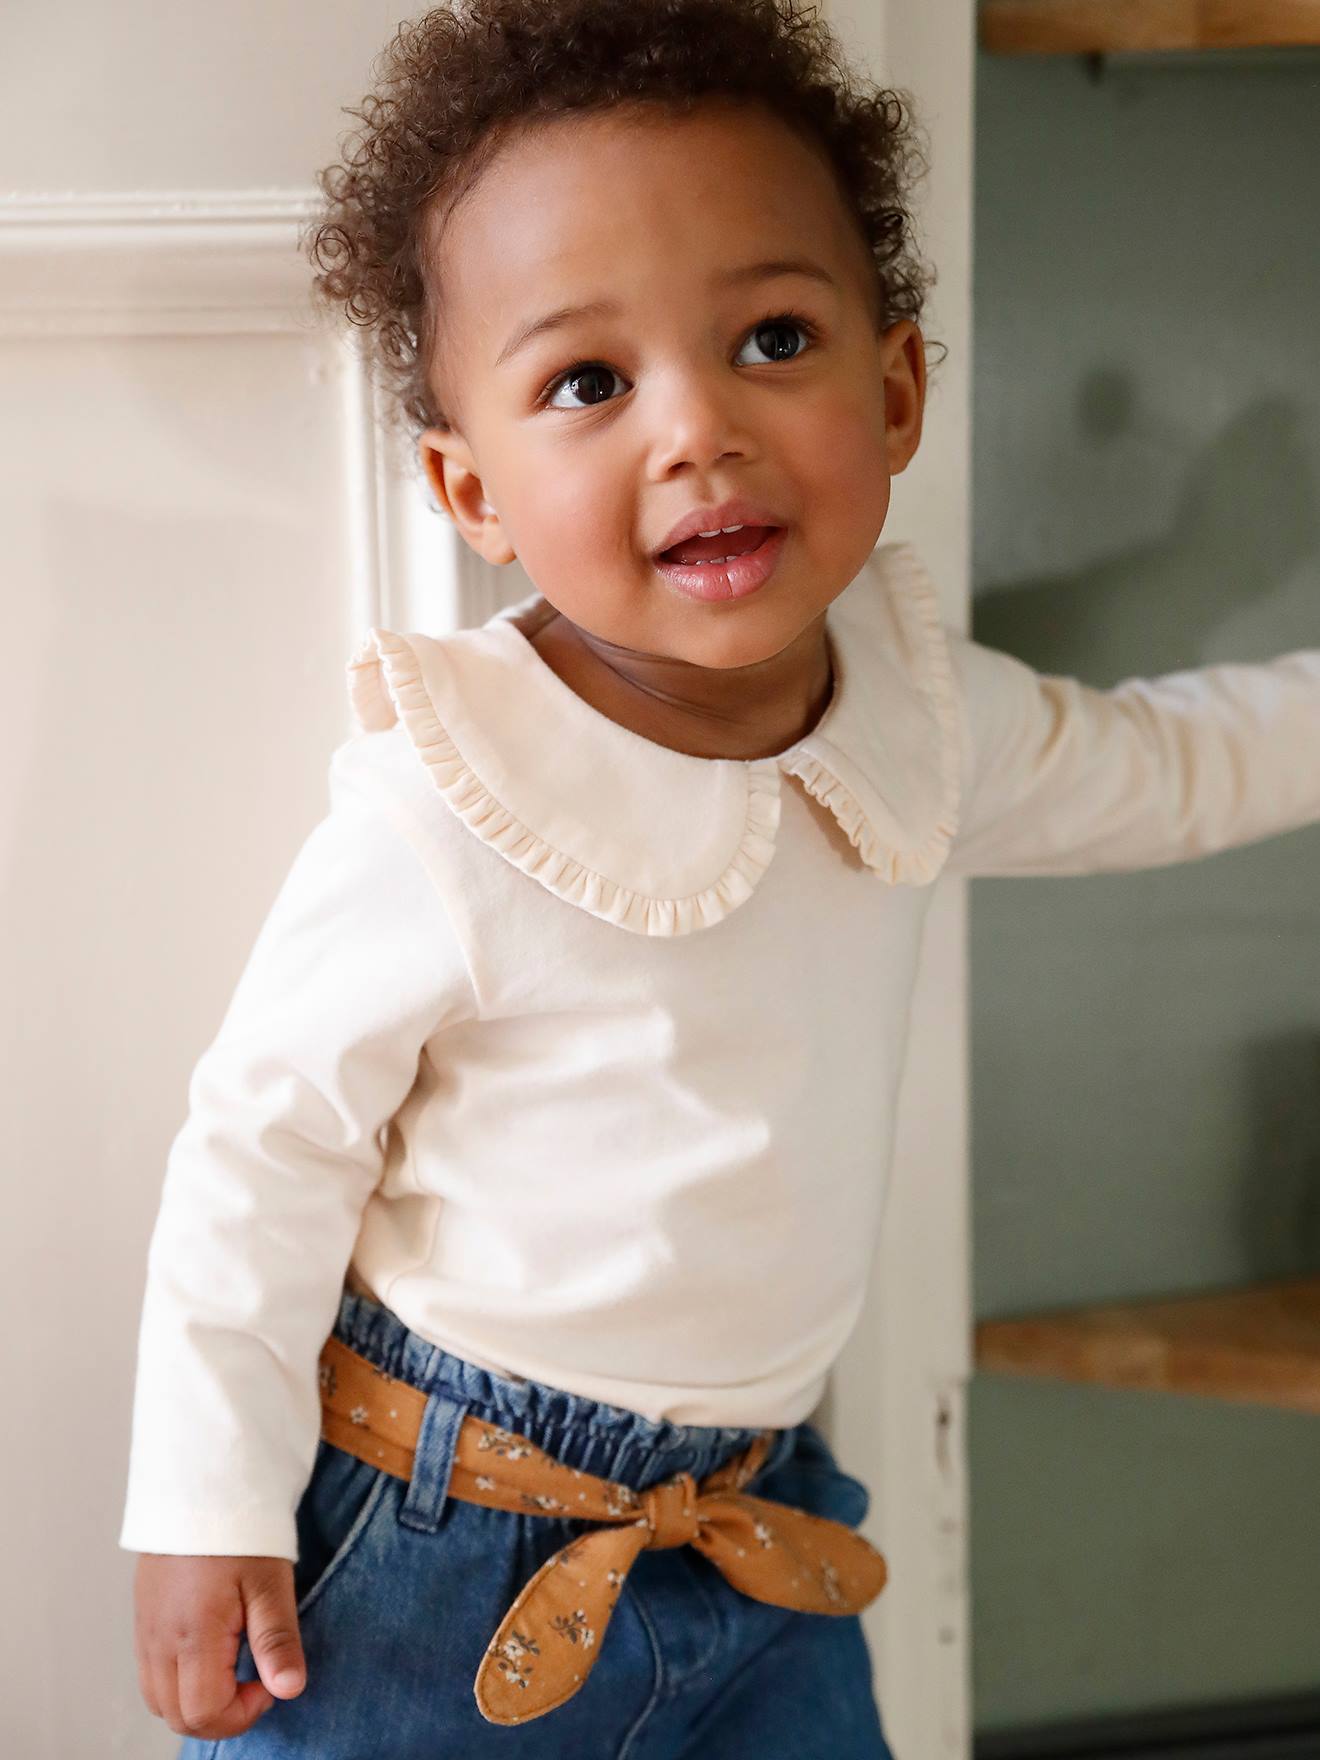 https://media.vertbaudet.com/Pictures/vertbaudet/239342/long-sleeve-top-with-peter-pan-collar-for-babies.jpg